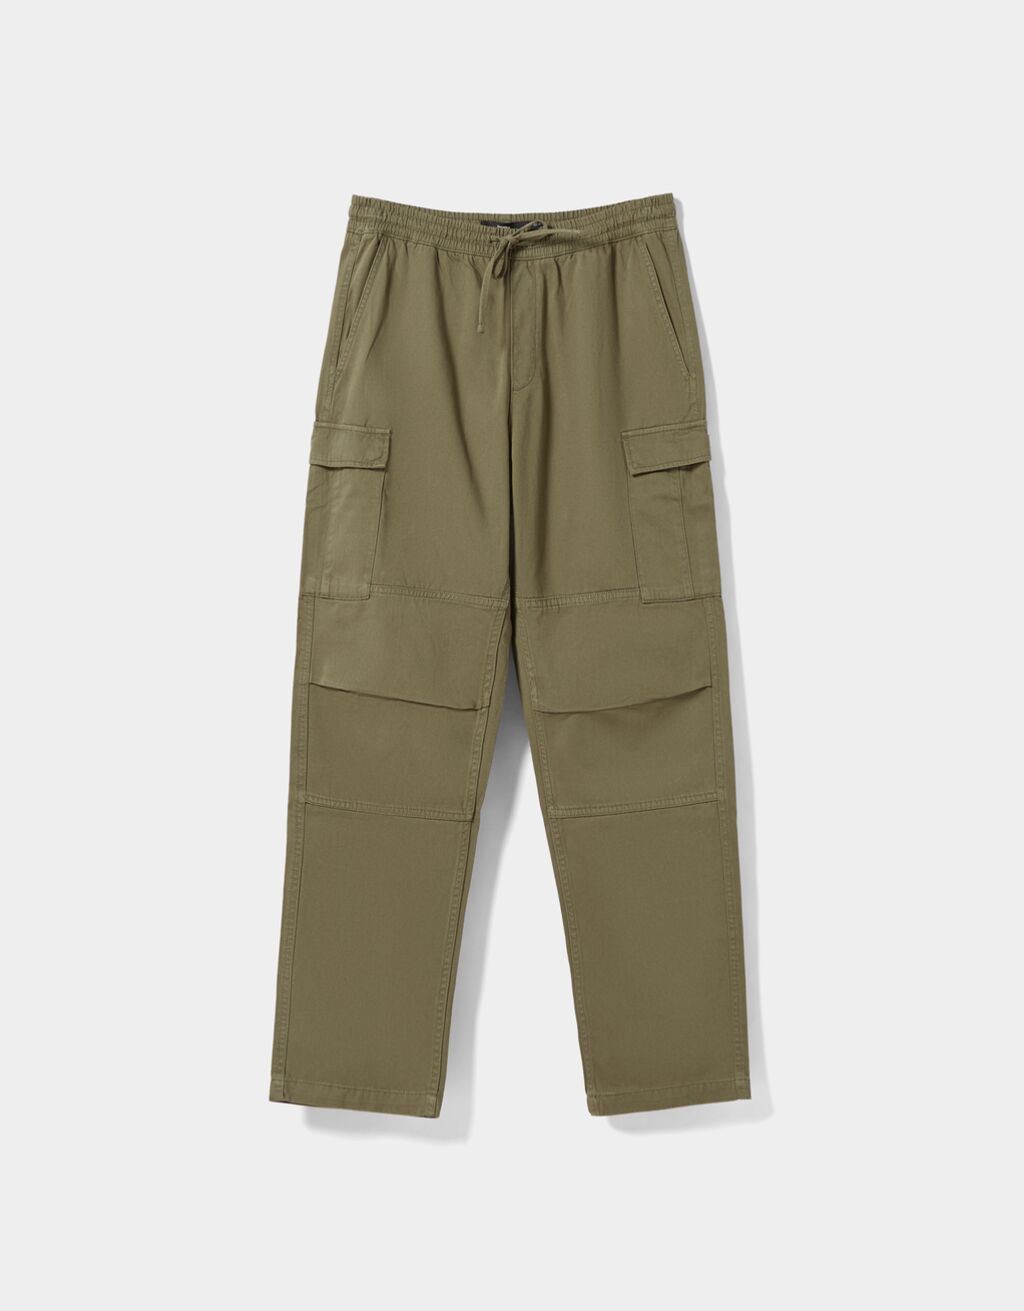 Карго панталон стандартна кройка тип джогър